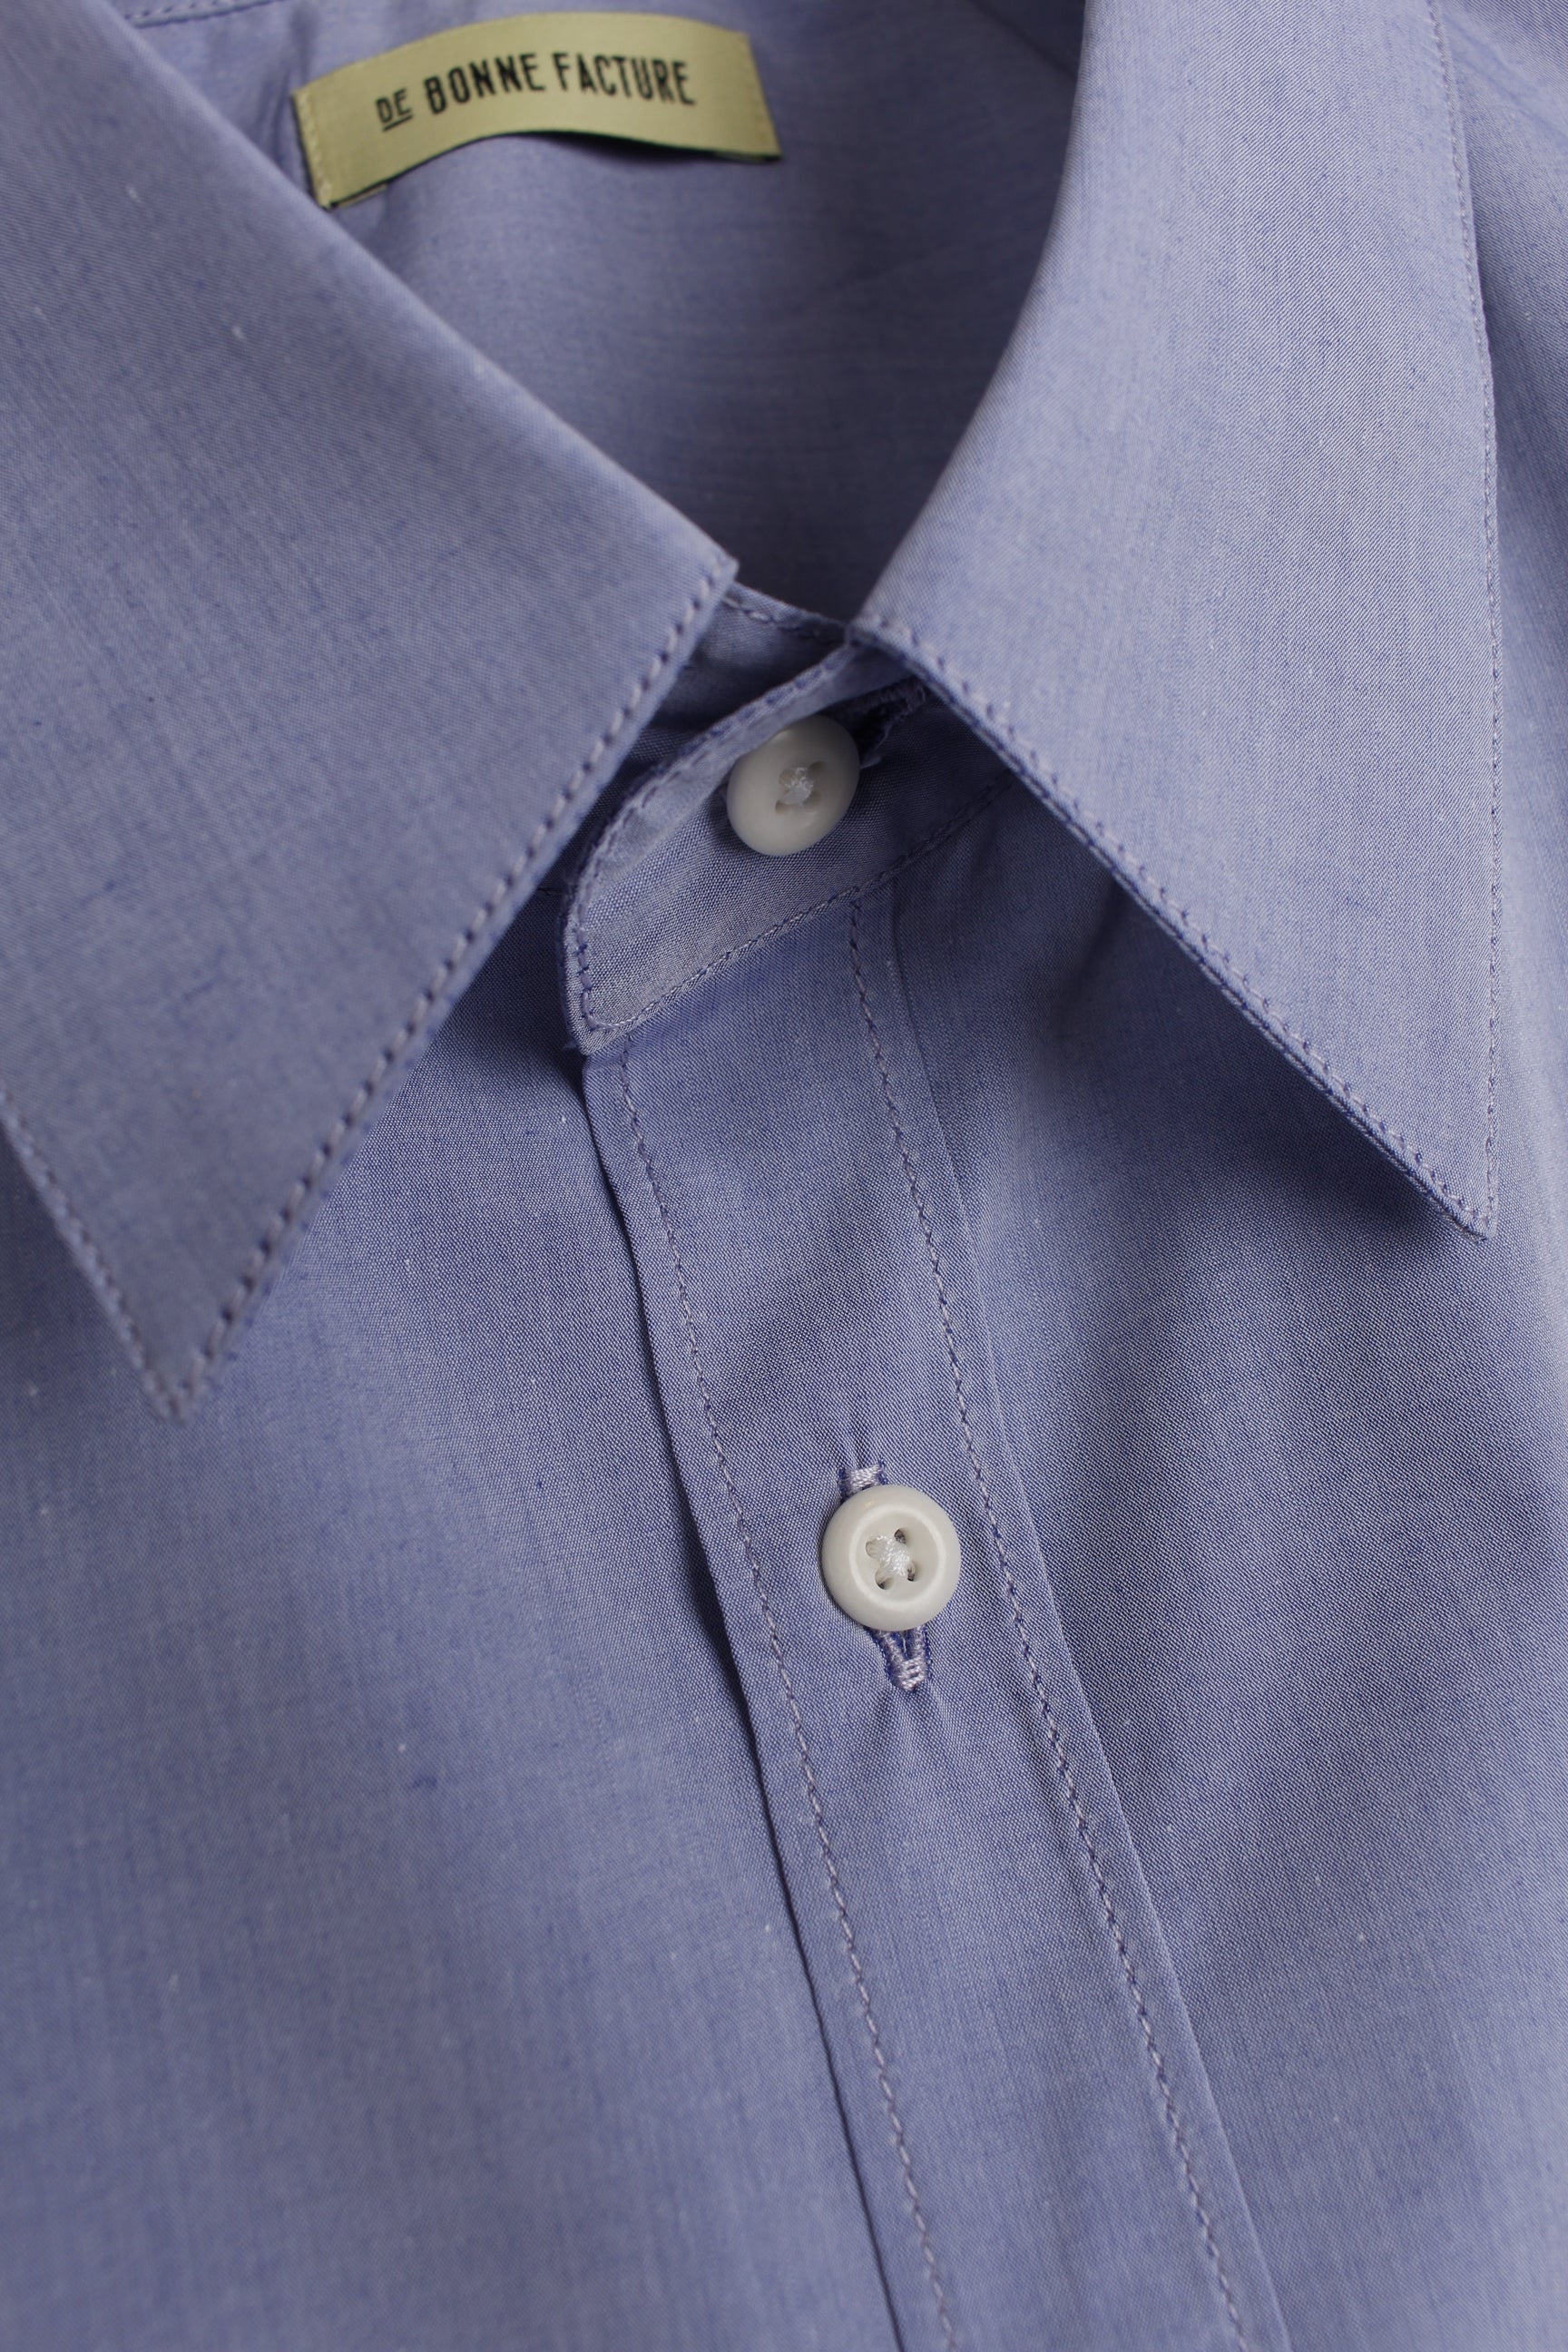 De Bonne Facture - Fall Winter 2022 - Edition 19 - Essential shirt - Italian cotton poplin - Sky blue